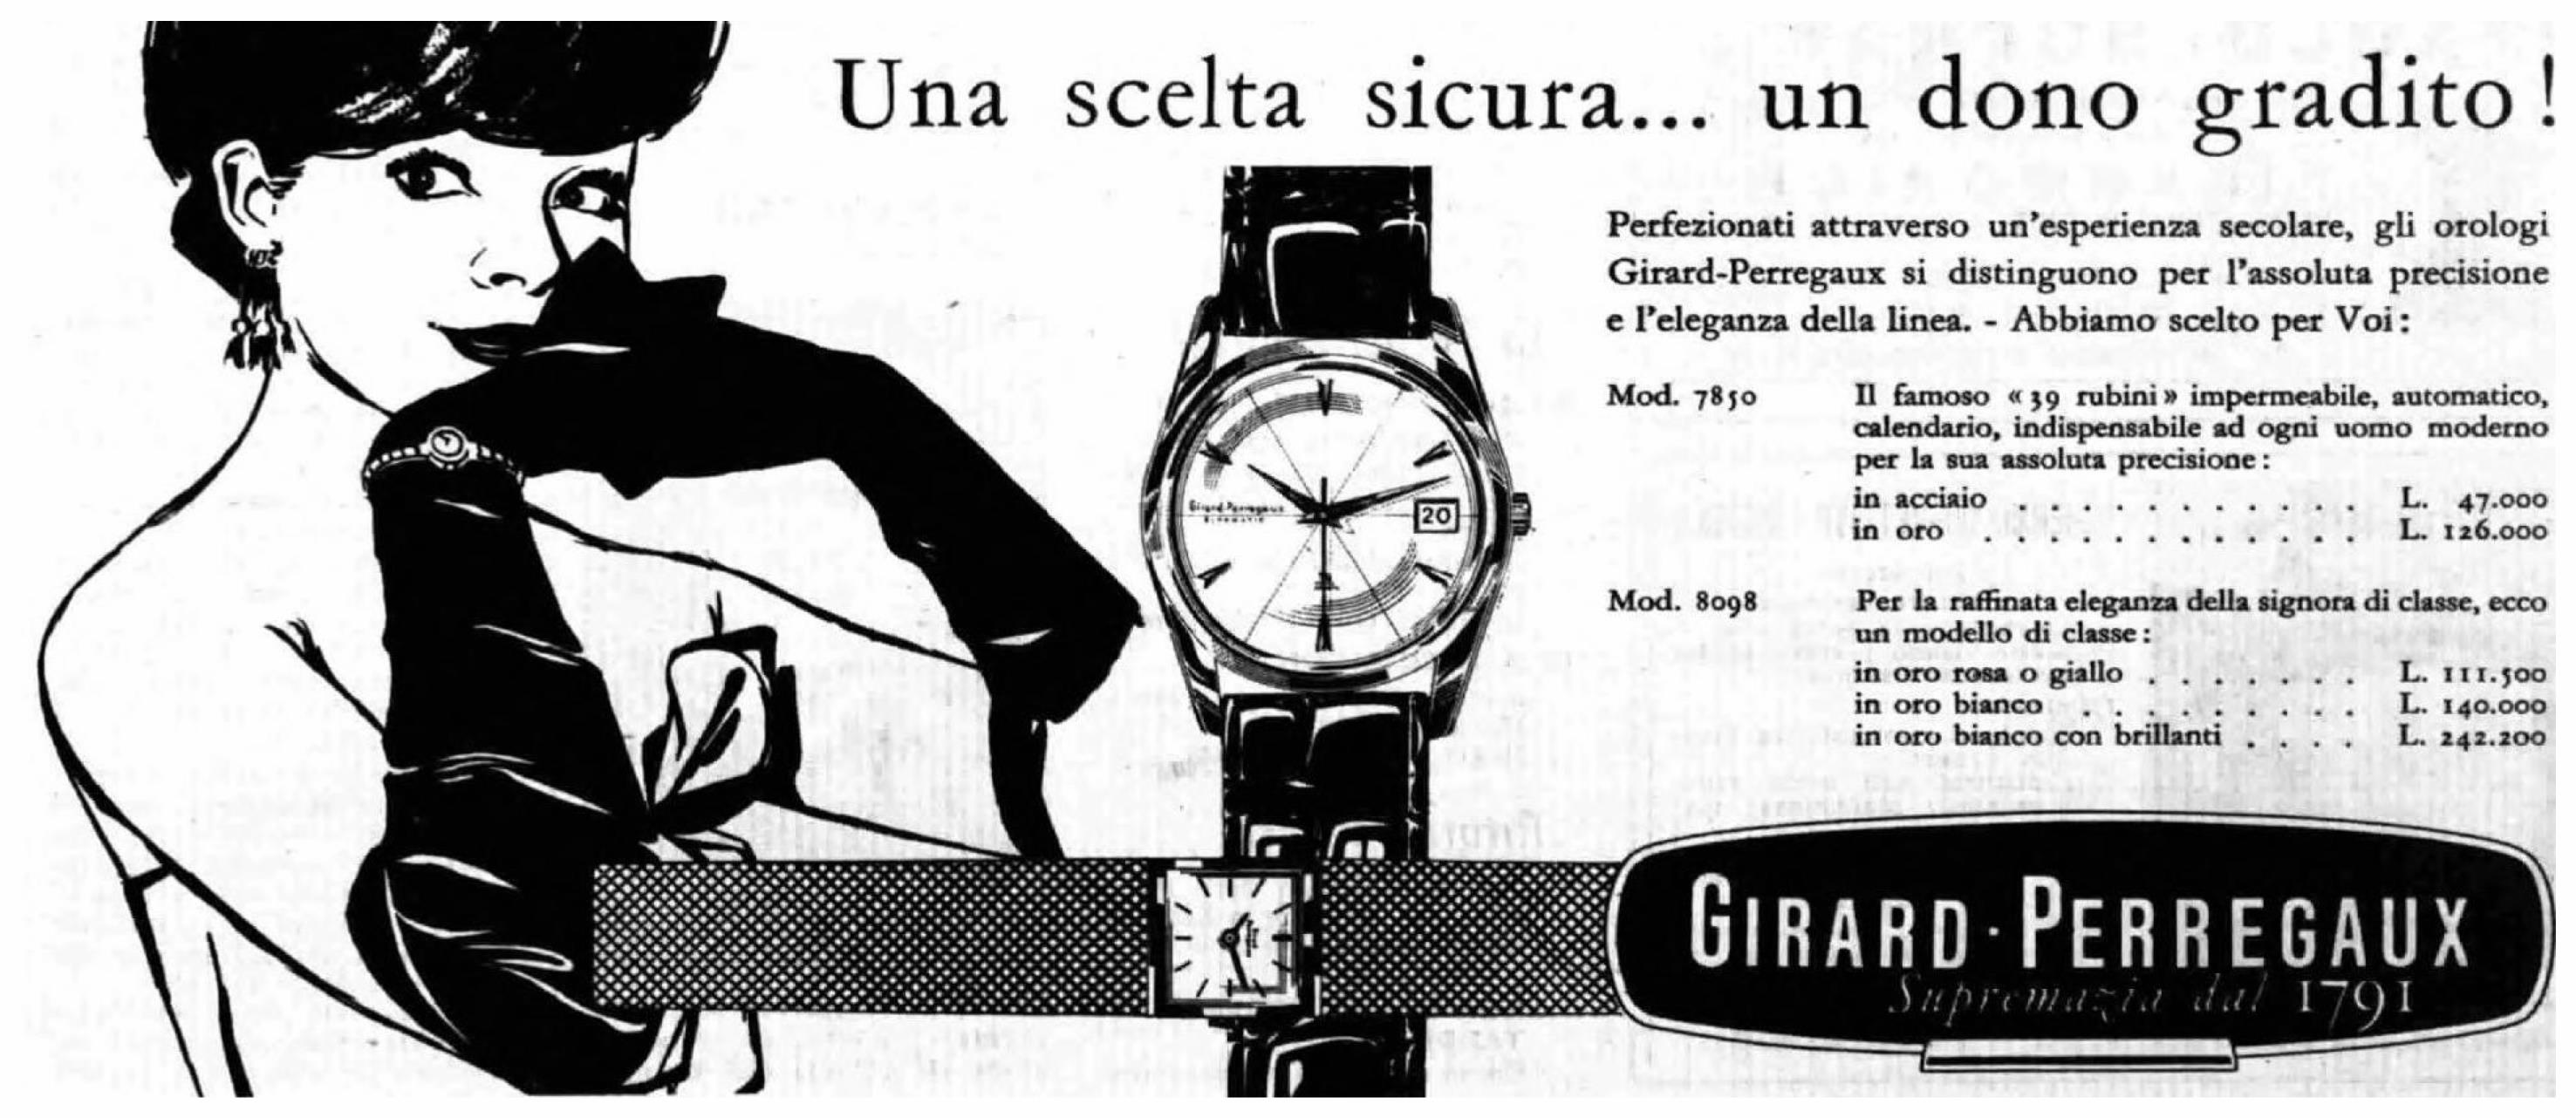 Girard-Perregaux 1962 107.jpg